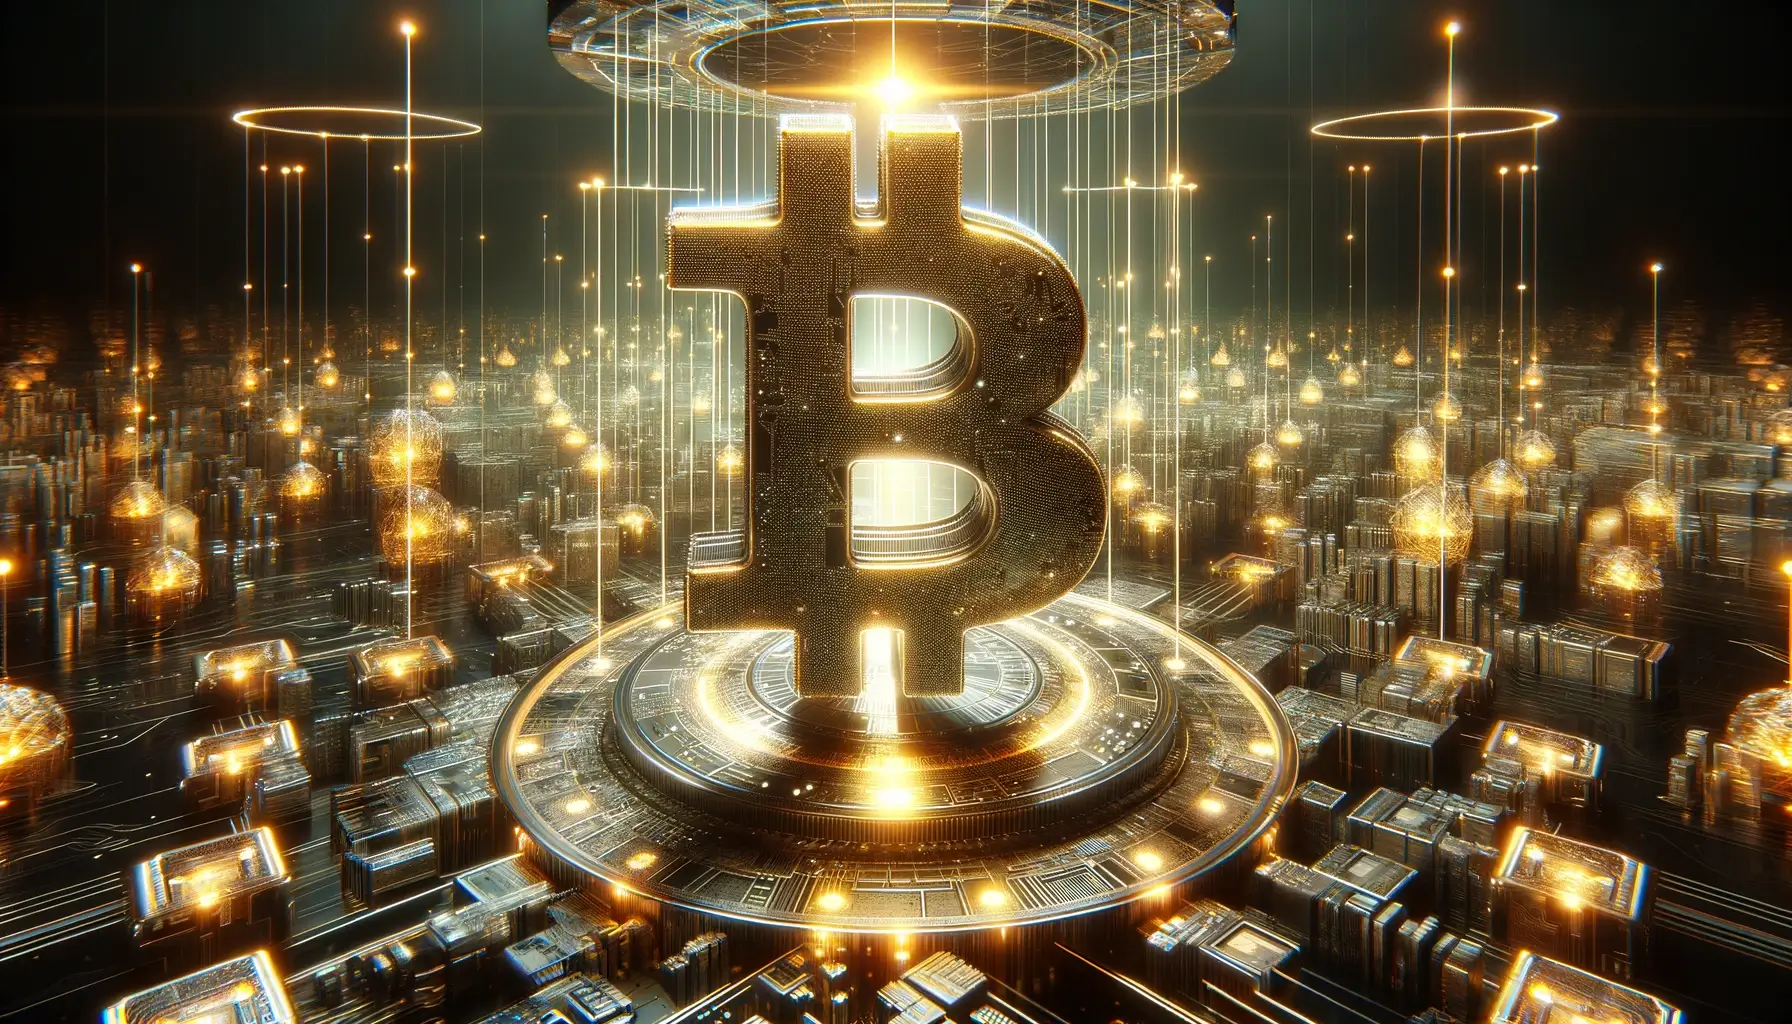 Futuristic Bitcoin Concept - Interconnected Blockchain Nodes and 3D Logo on Dark Background